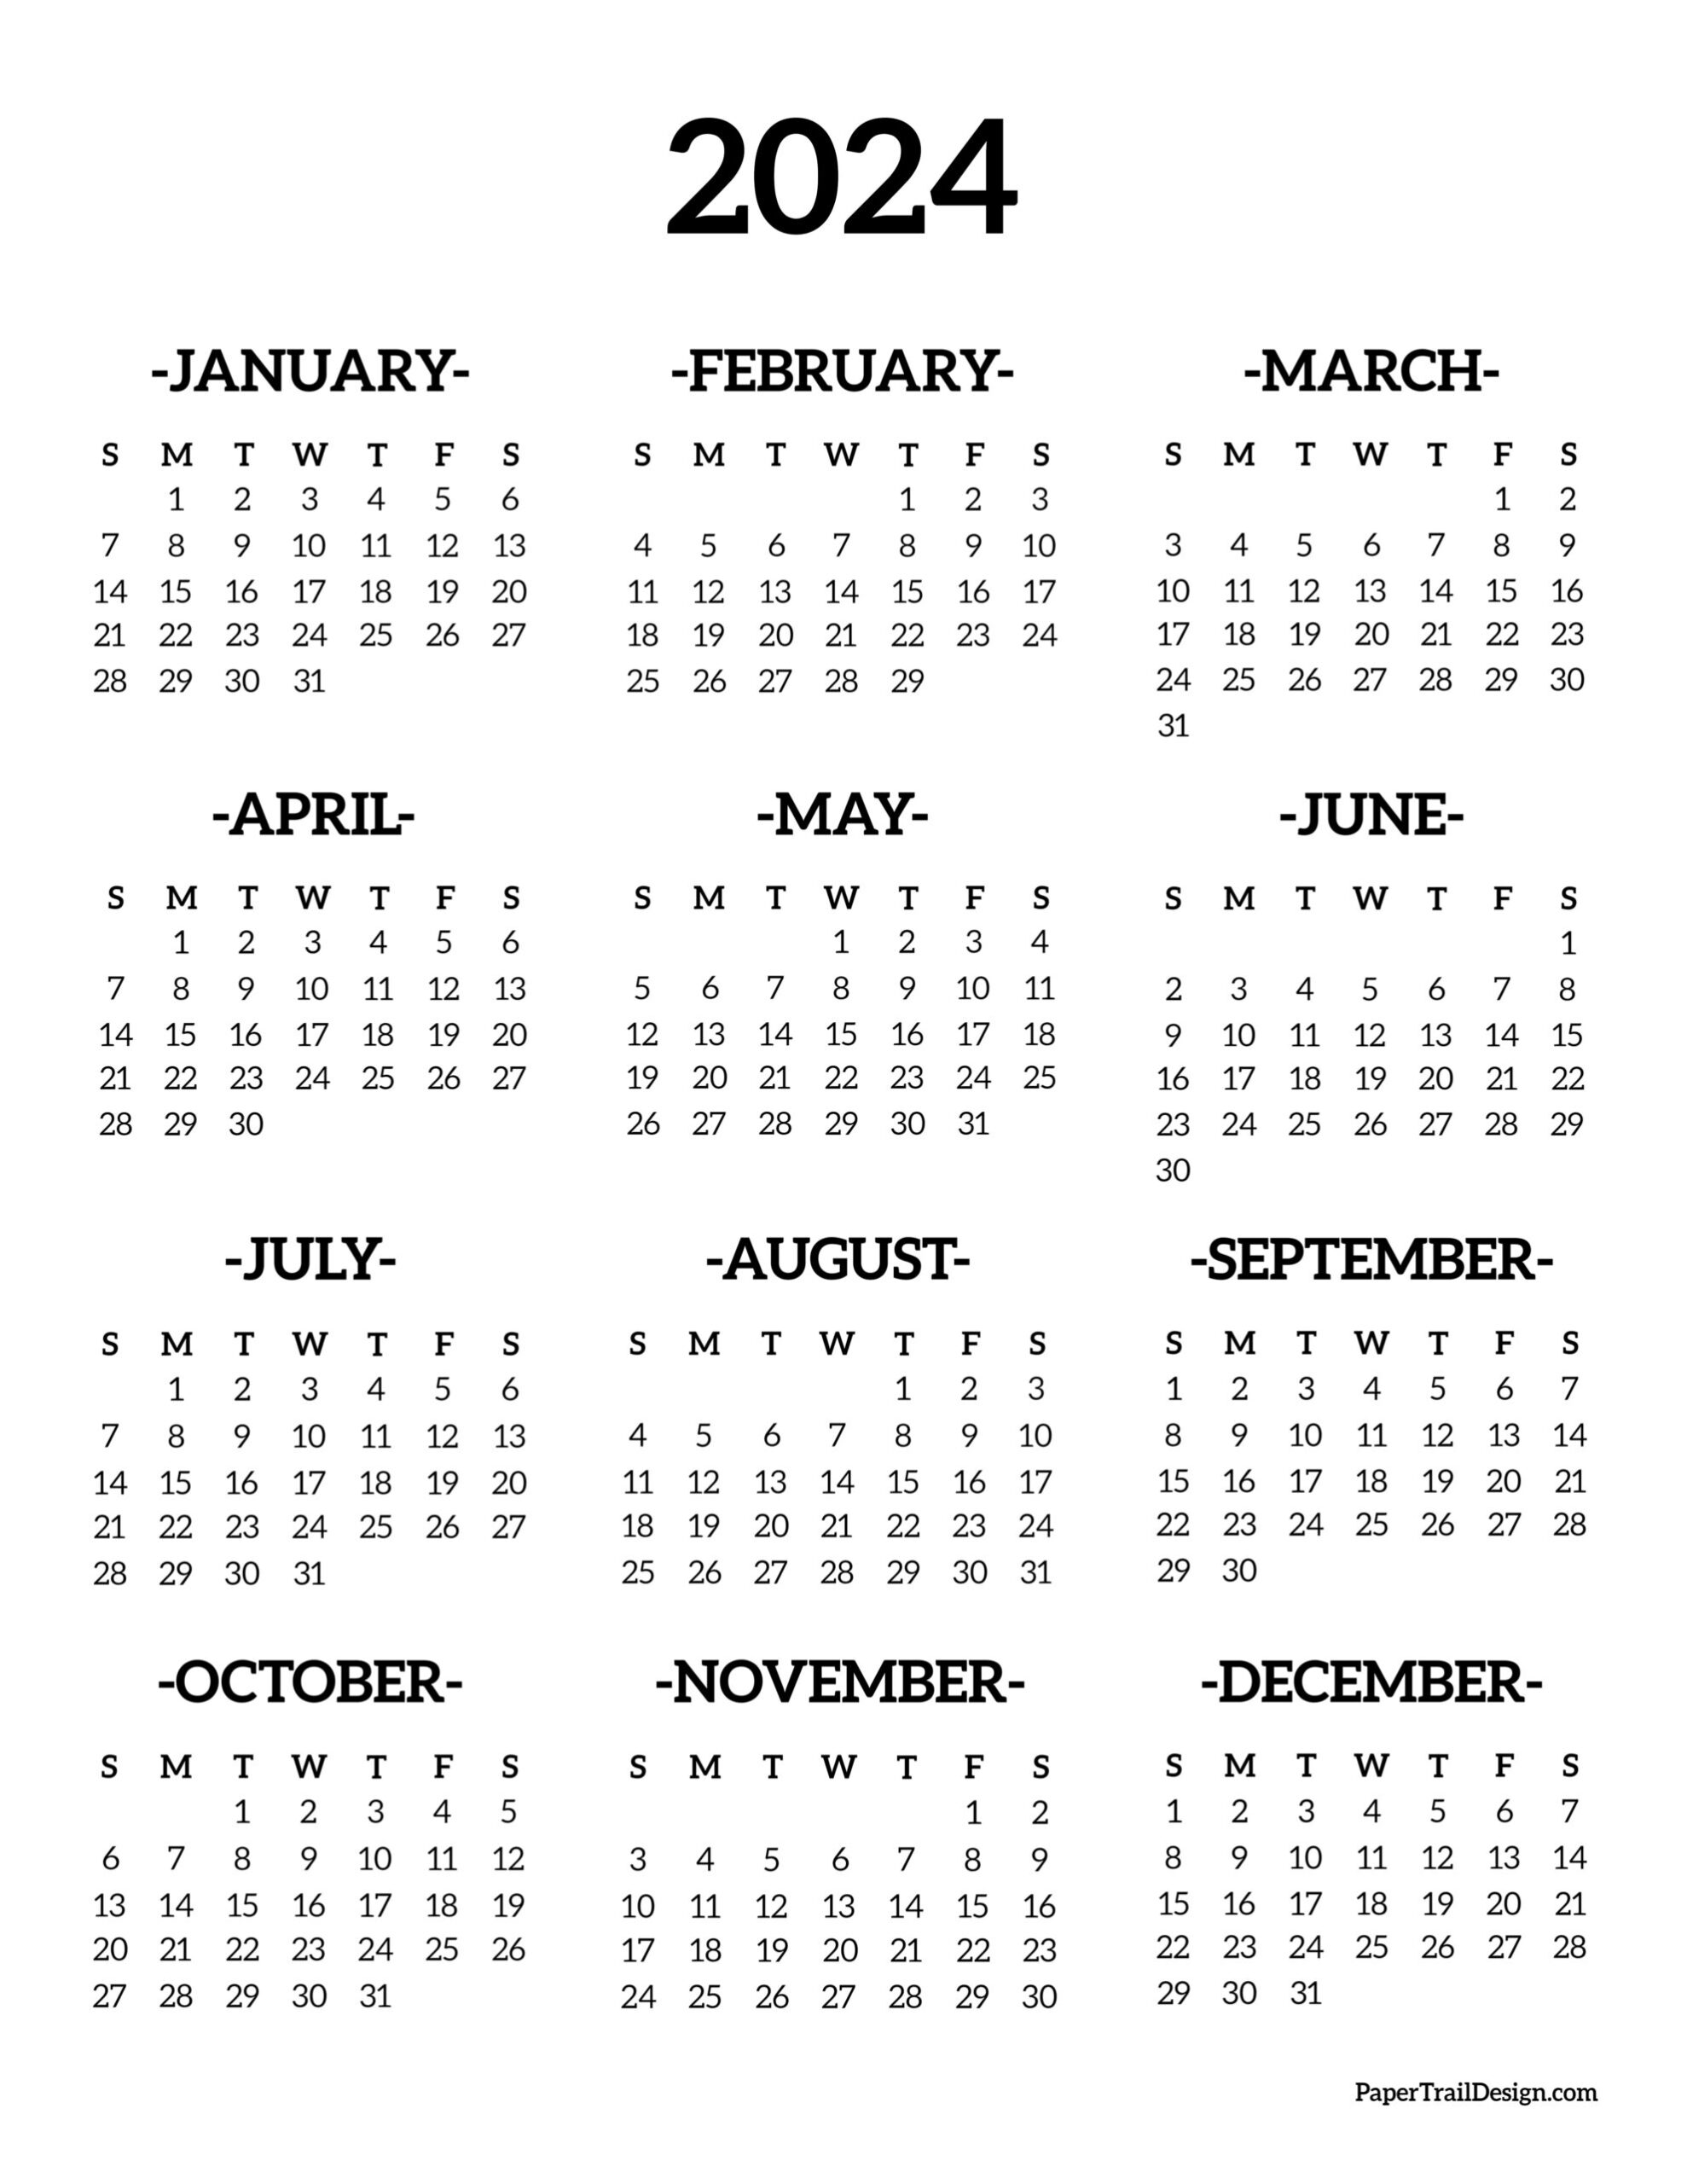 Calendar 2024 Printable One Page - Paper Trail Design for Printable Annual Calendar 2024